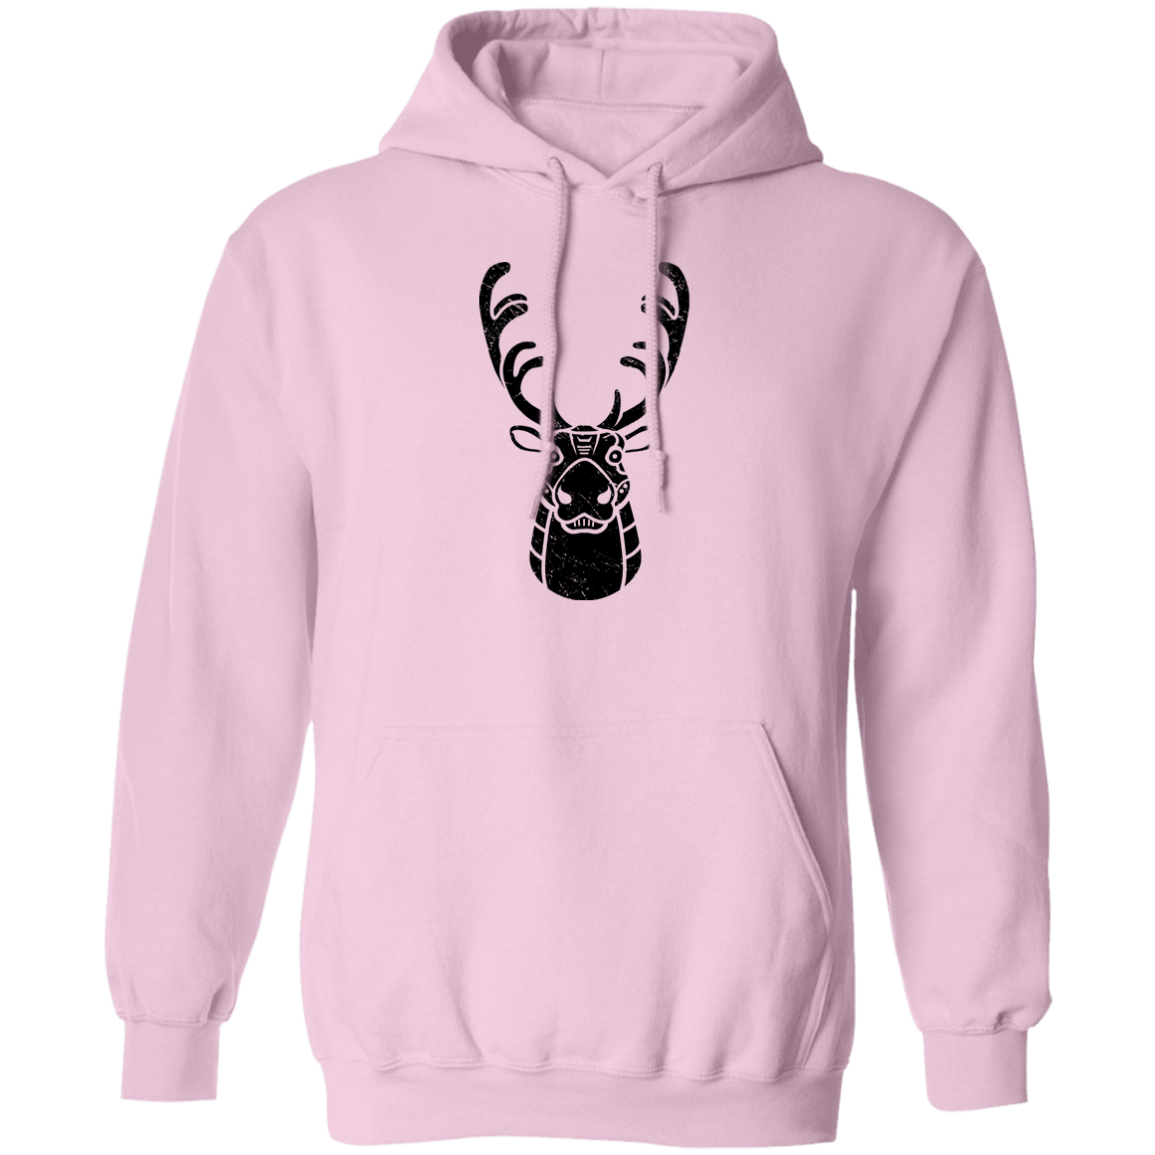 Black Distressed Emblem Hoodies for Adults (Caribou/Spirit)